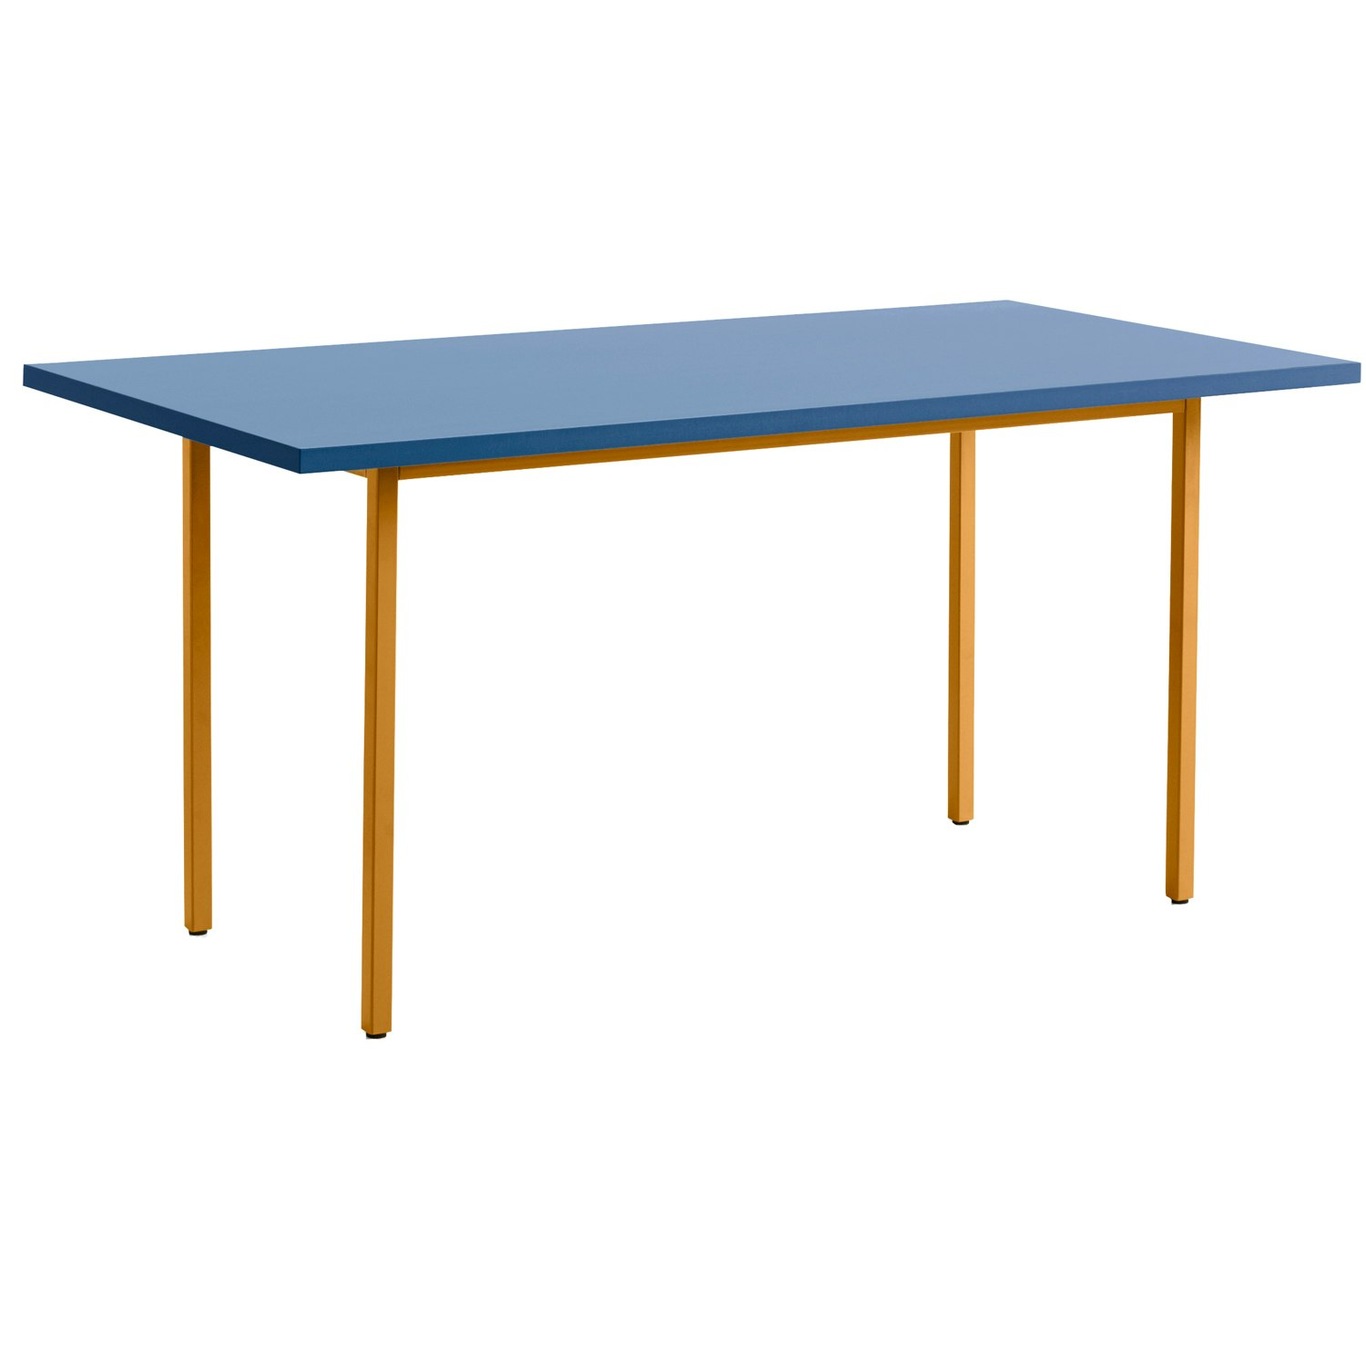 Two-Colour Tisch 160x82 cm, Ocker / Blau